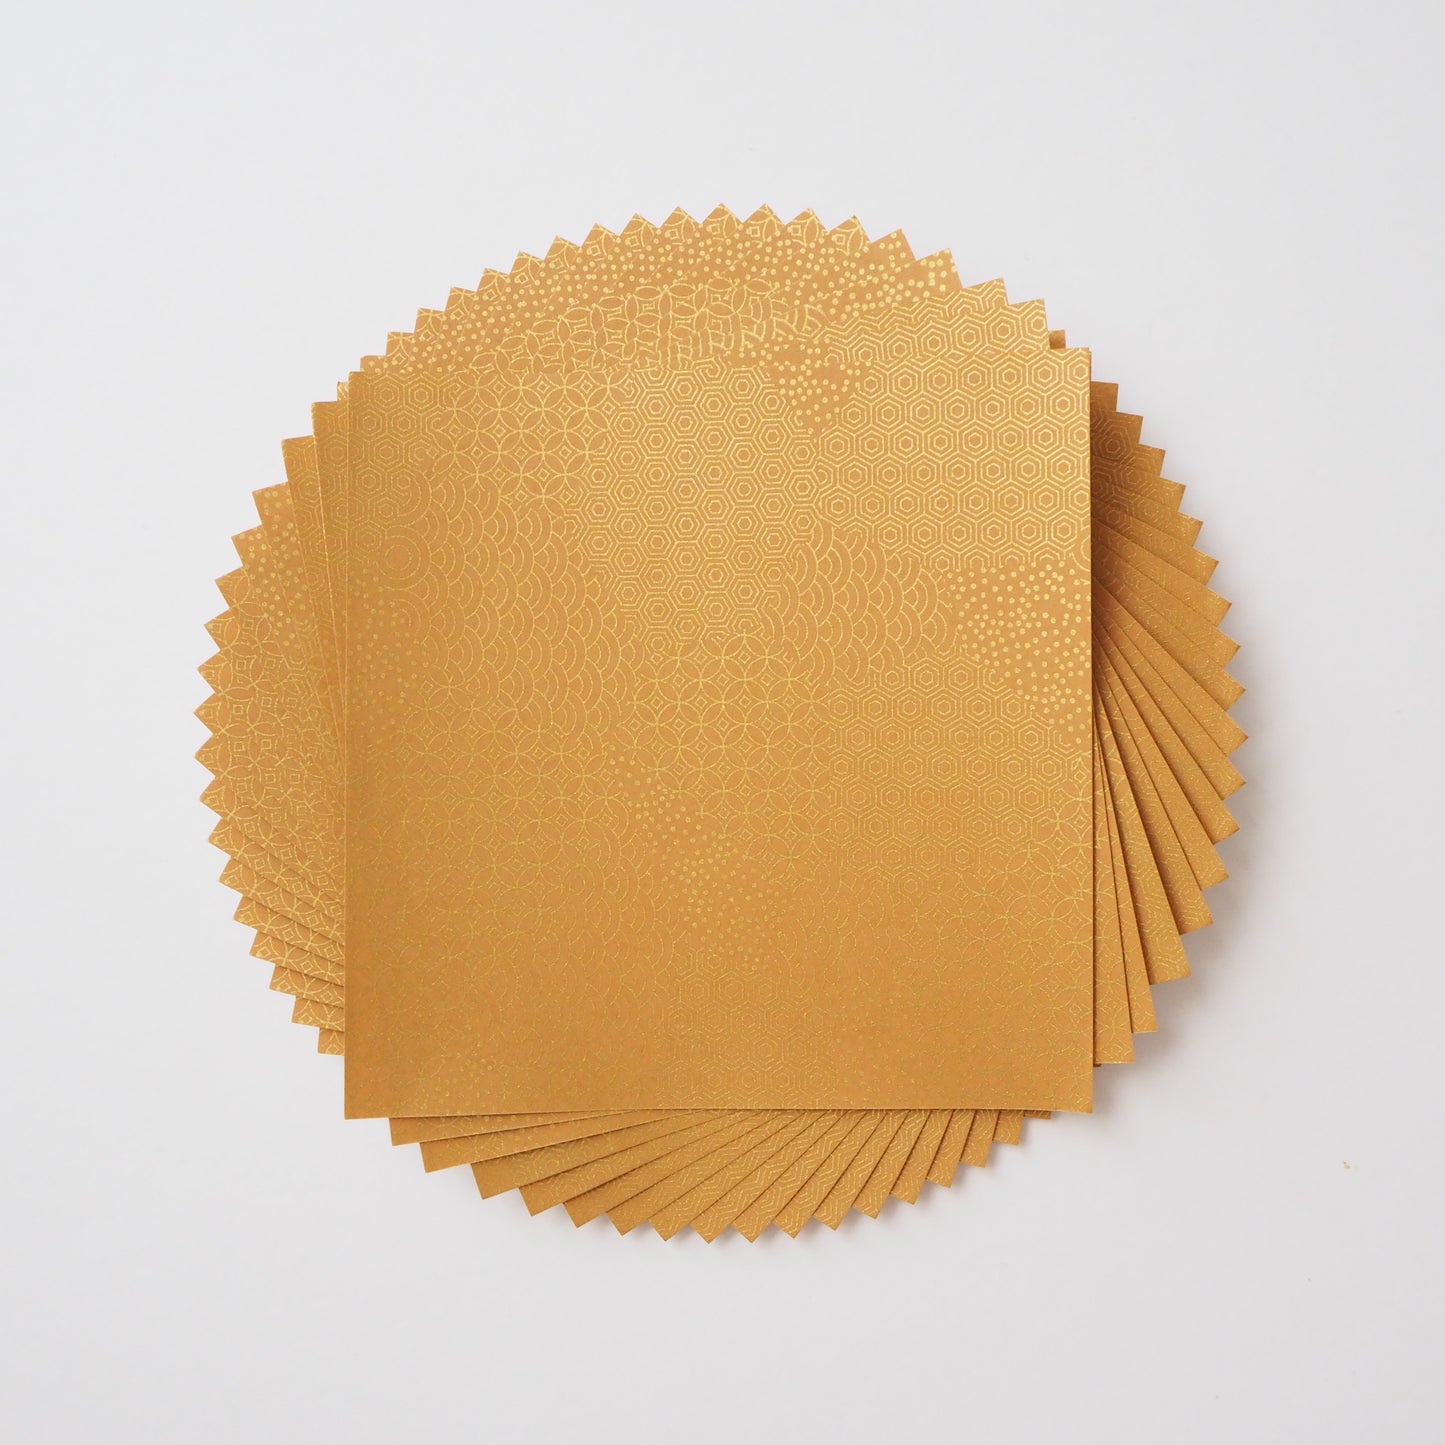 Pack of 20 Sheets 14x14cm Yuzen Washi Origami Paper HZ-494 - Blown Gold Mixed Geometric Patterns